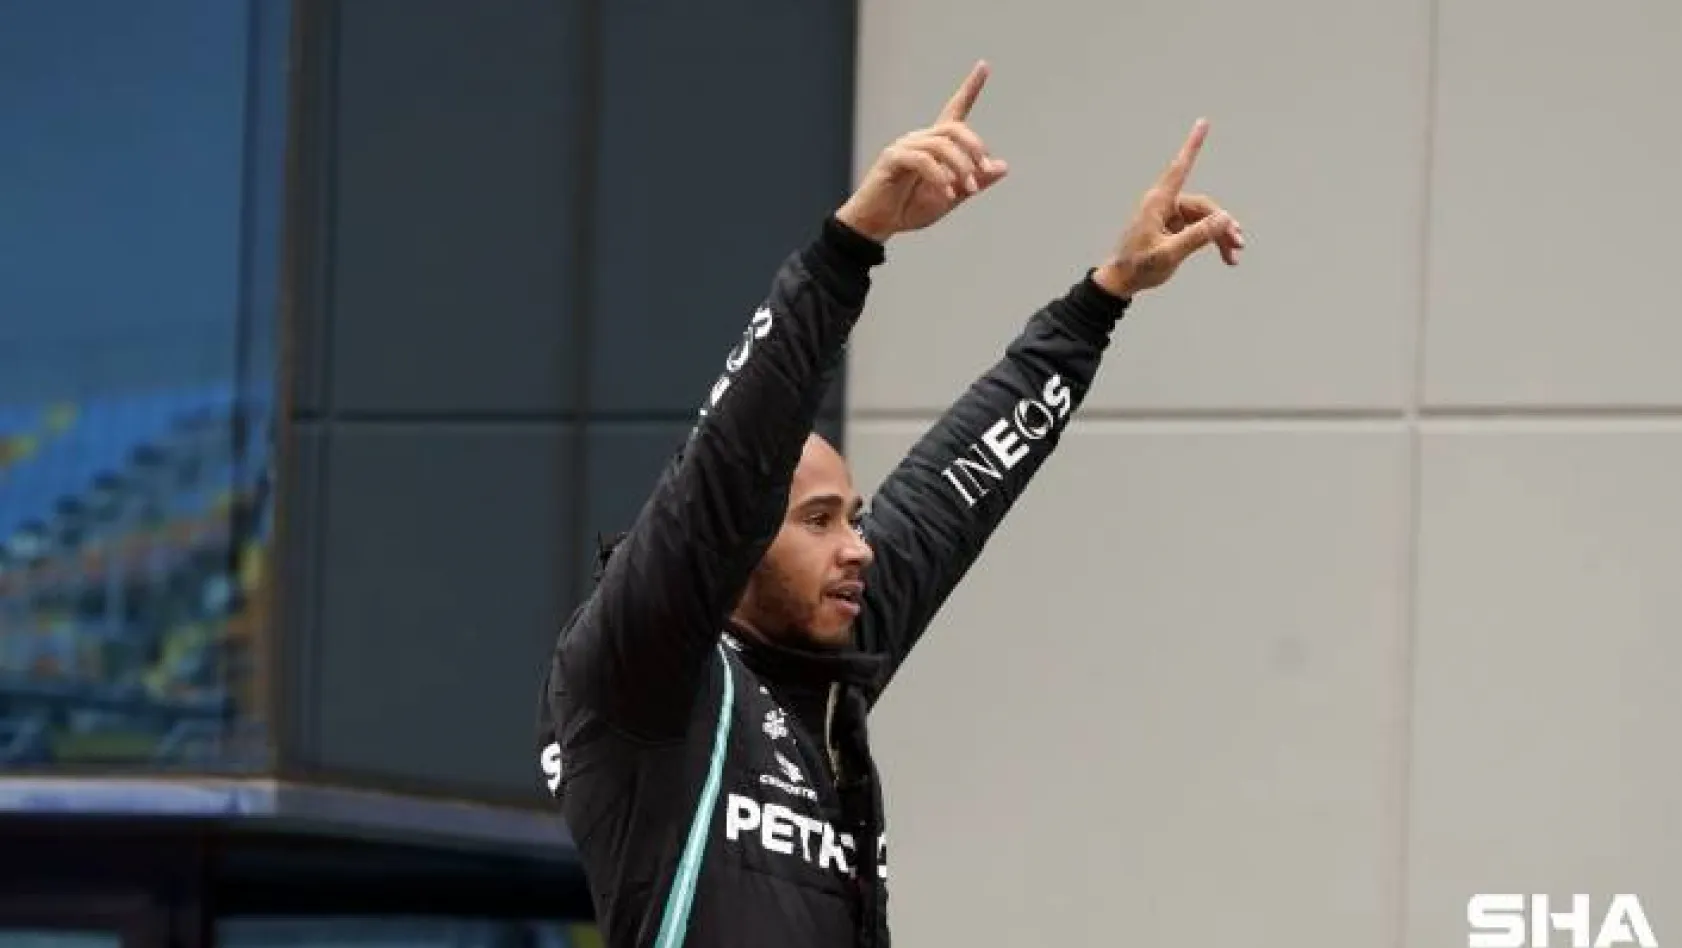 Lewis Hamilton korona virüse yakalandı